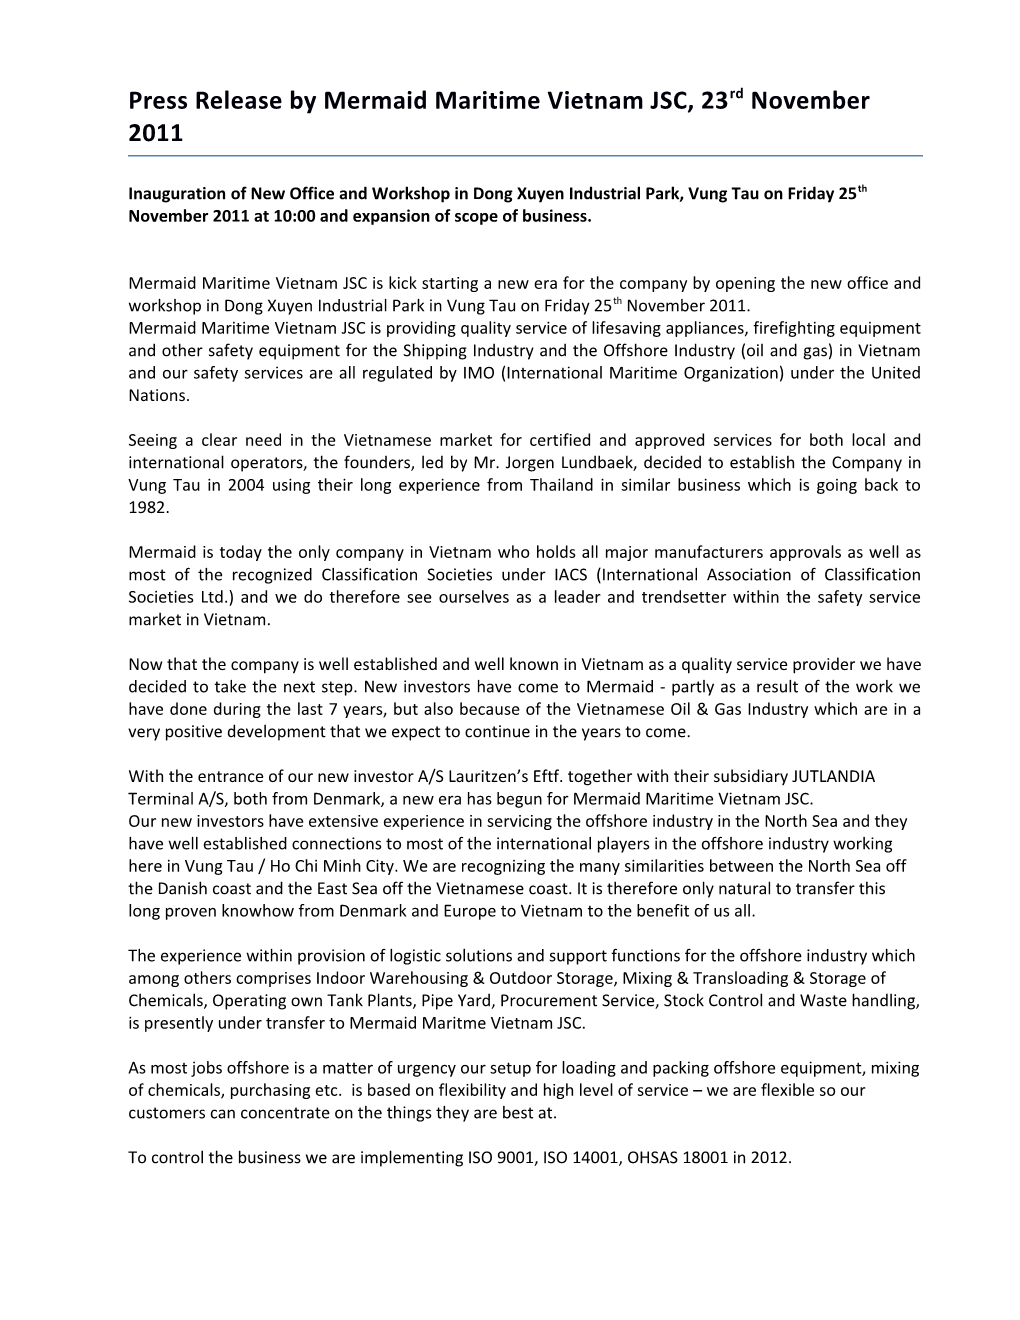 Press Release by Mermaid Maritime Vietnam JSC, 23Rd November 2011